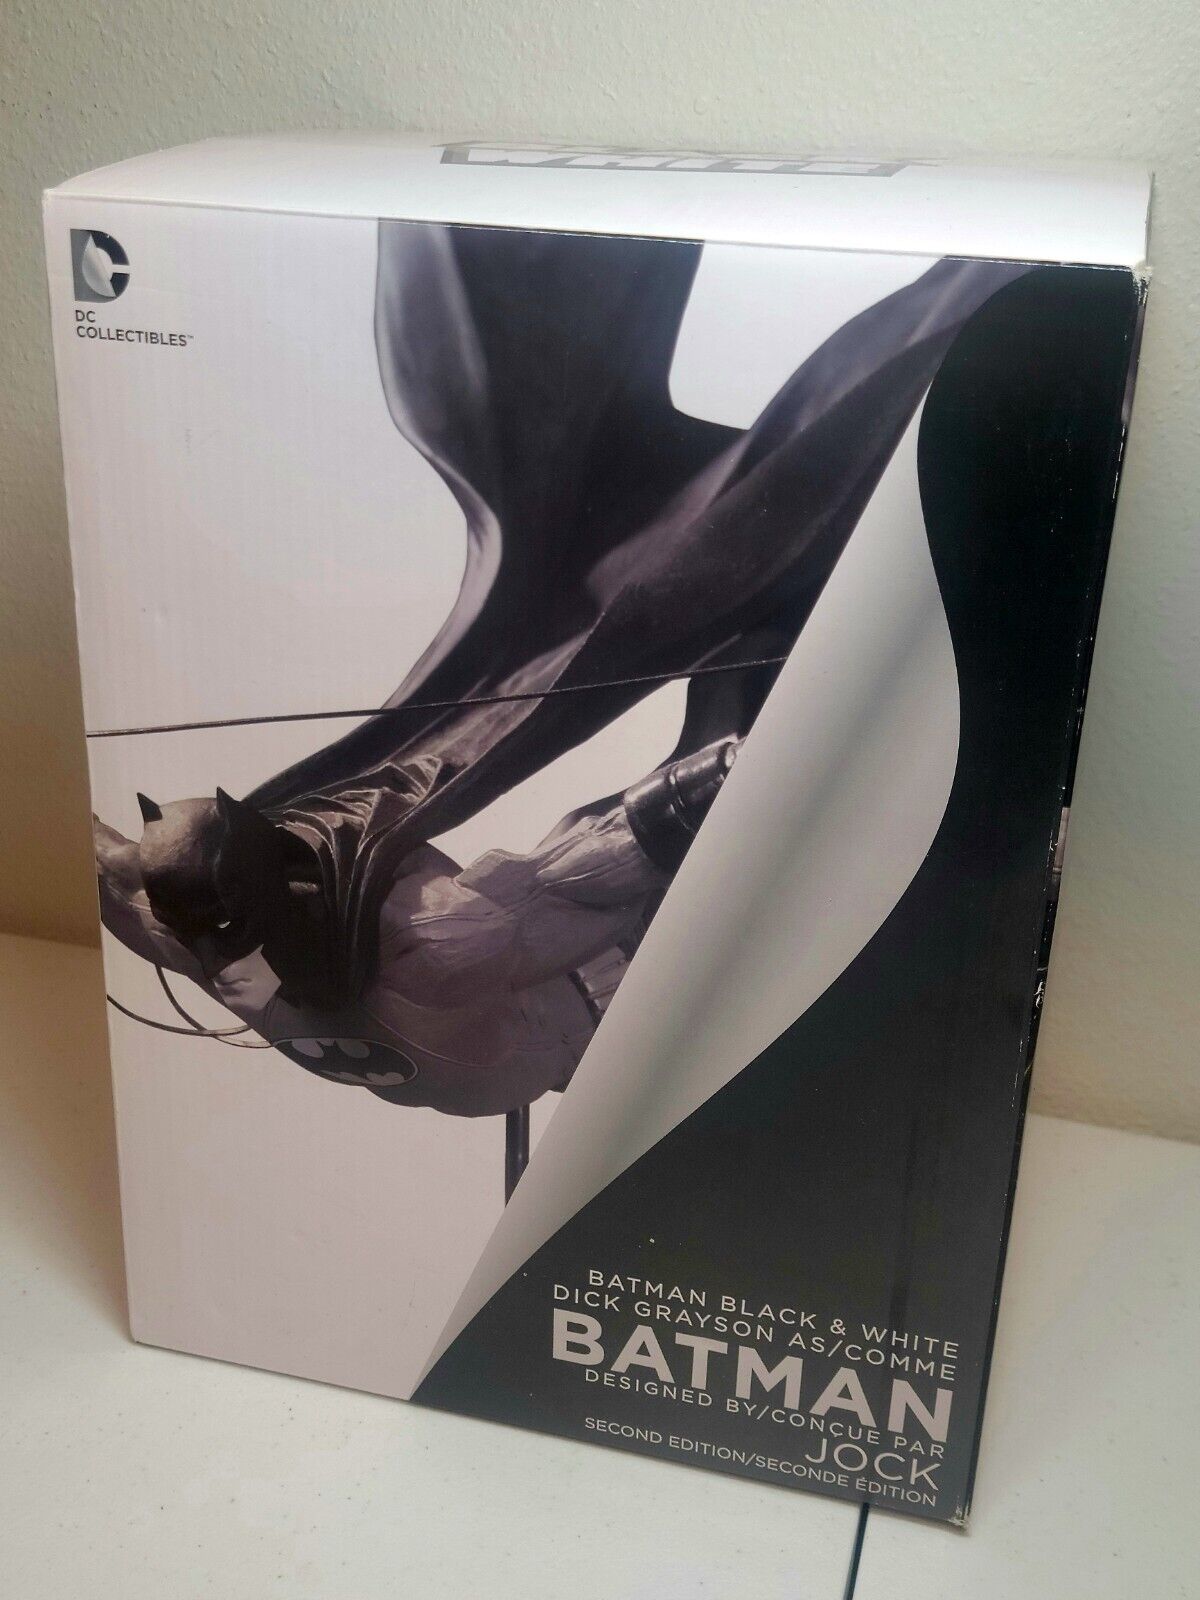 Batman Dick Grayson Black & White Statue Jock 2nd Edition DC Comics NIB In Box